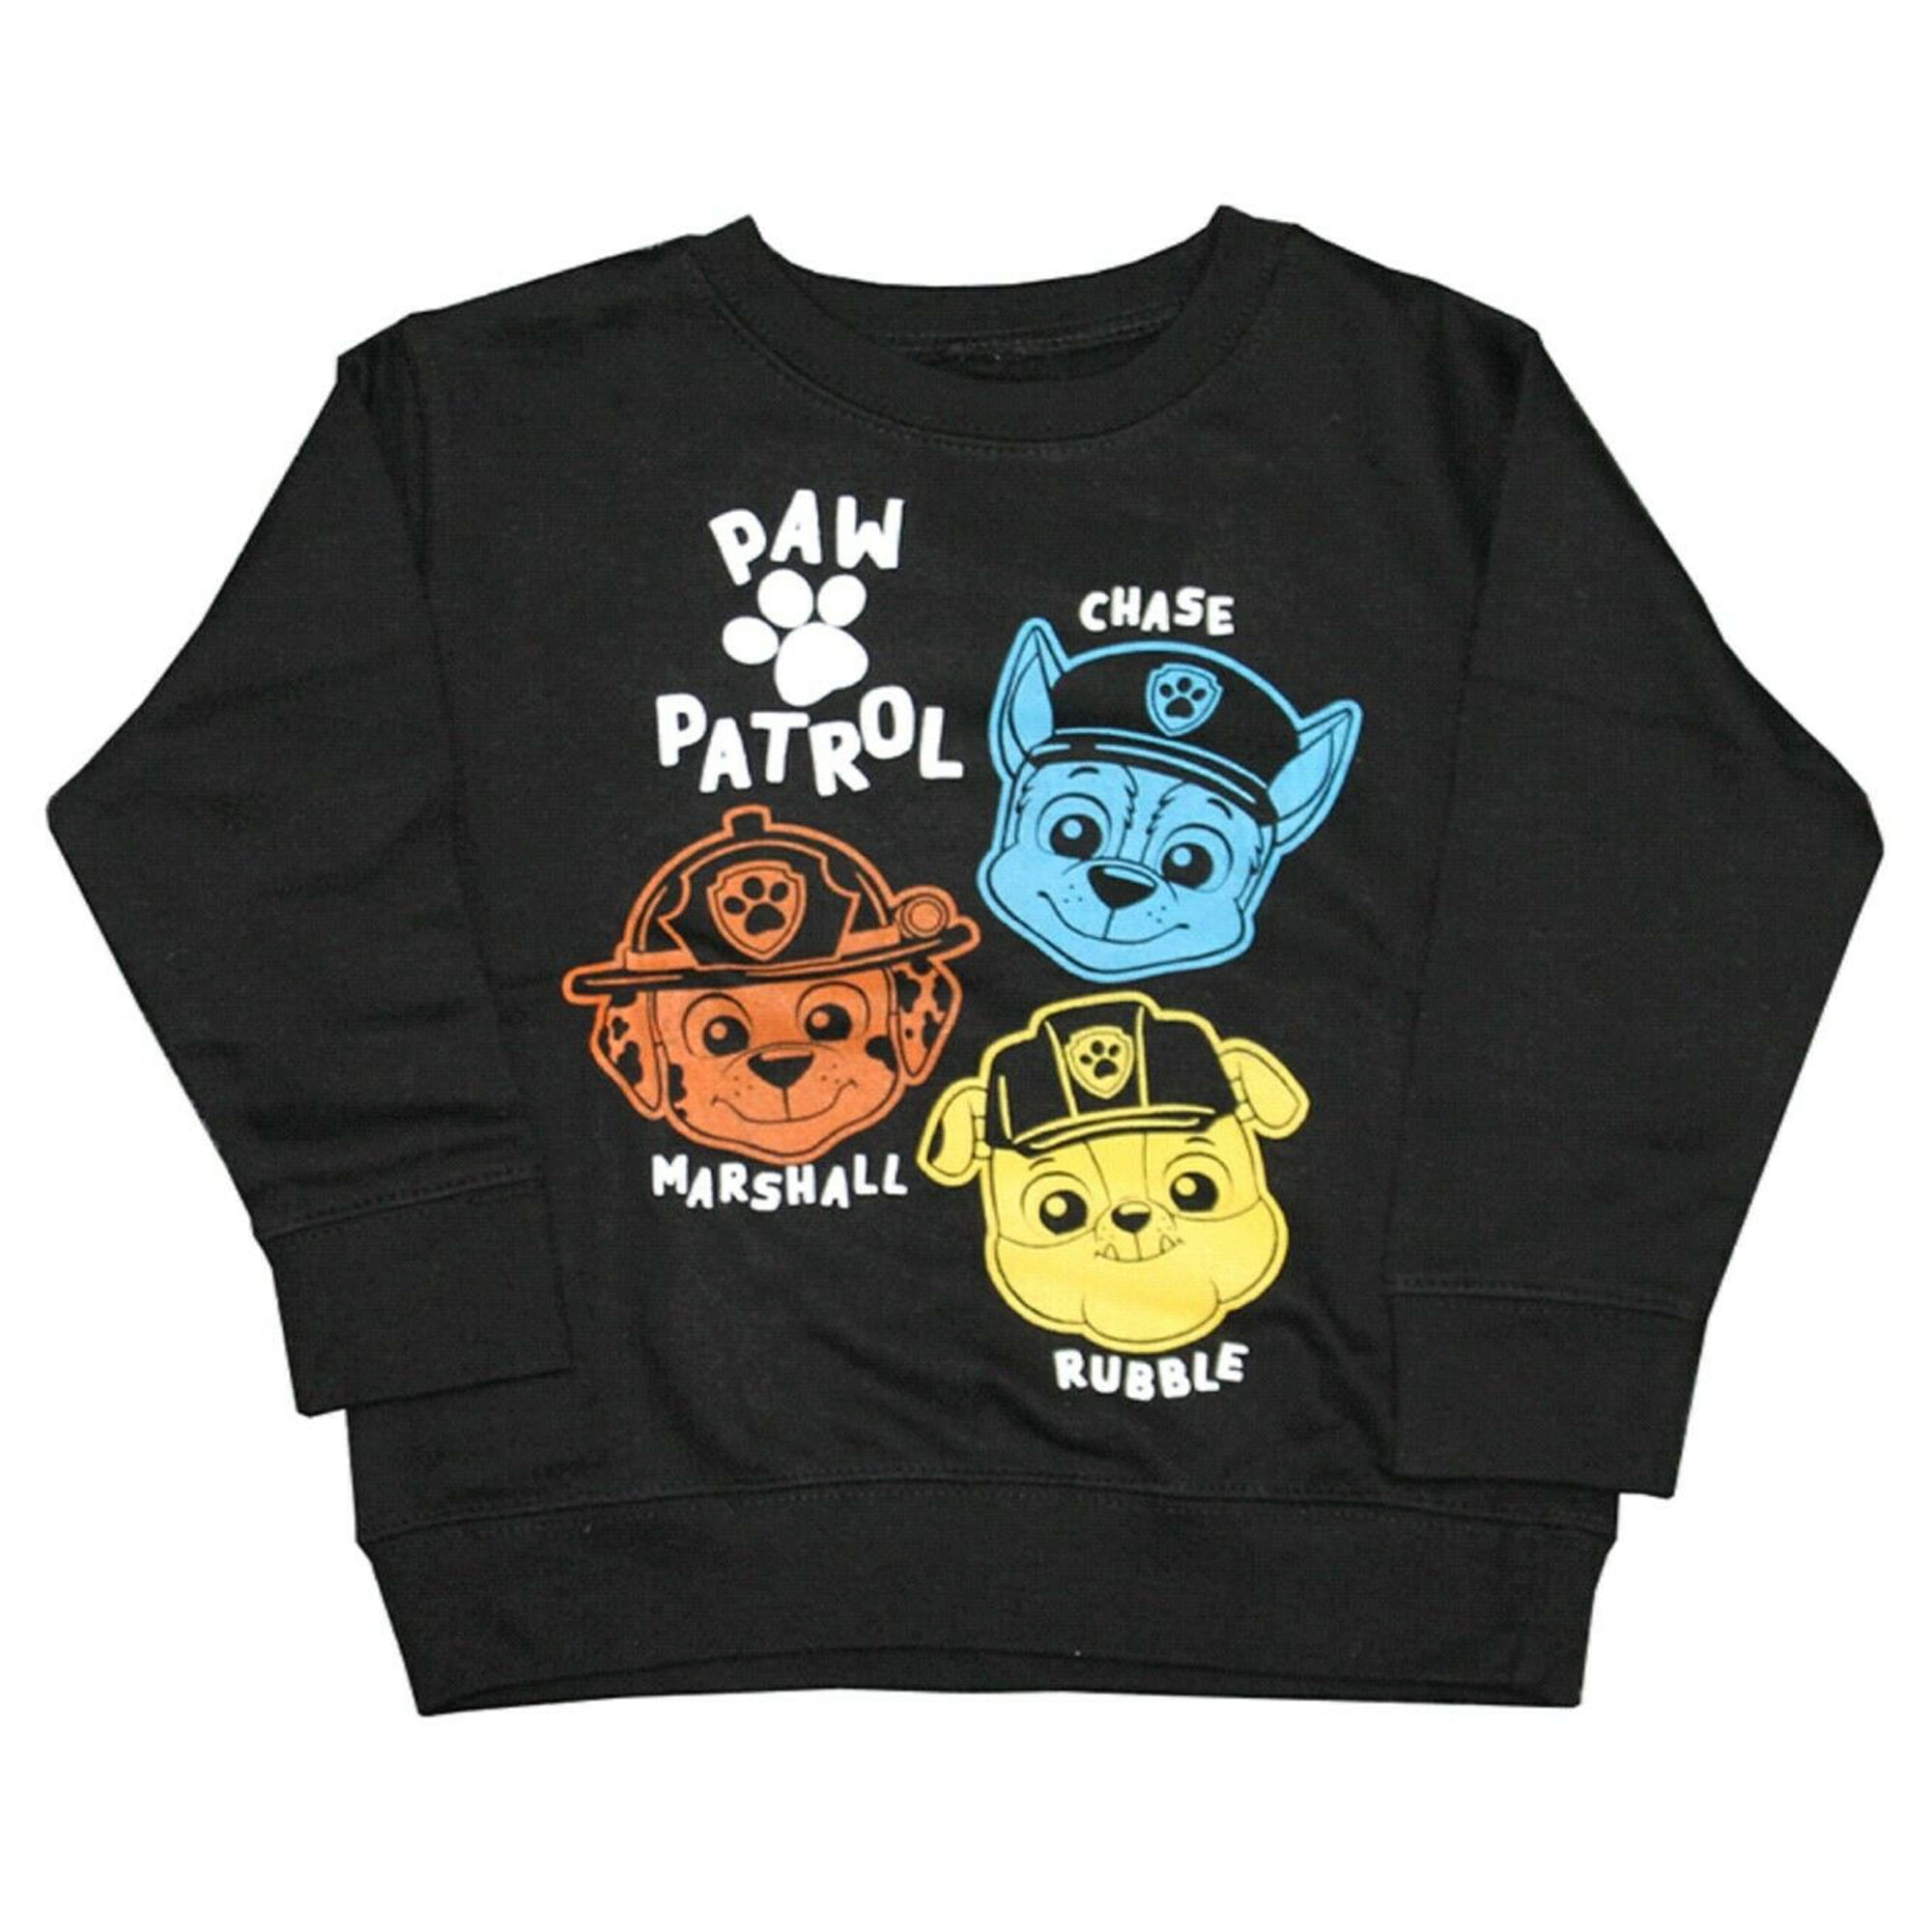 Paw Patrol, Marshall, Chase & Rubble Toddler Boy's Crewneck Sweatshirt